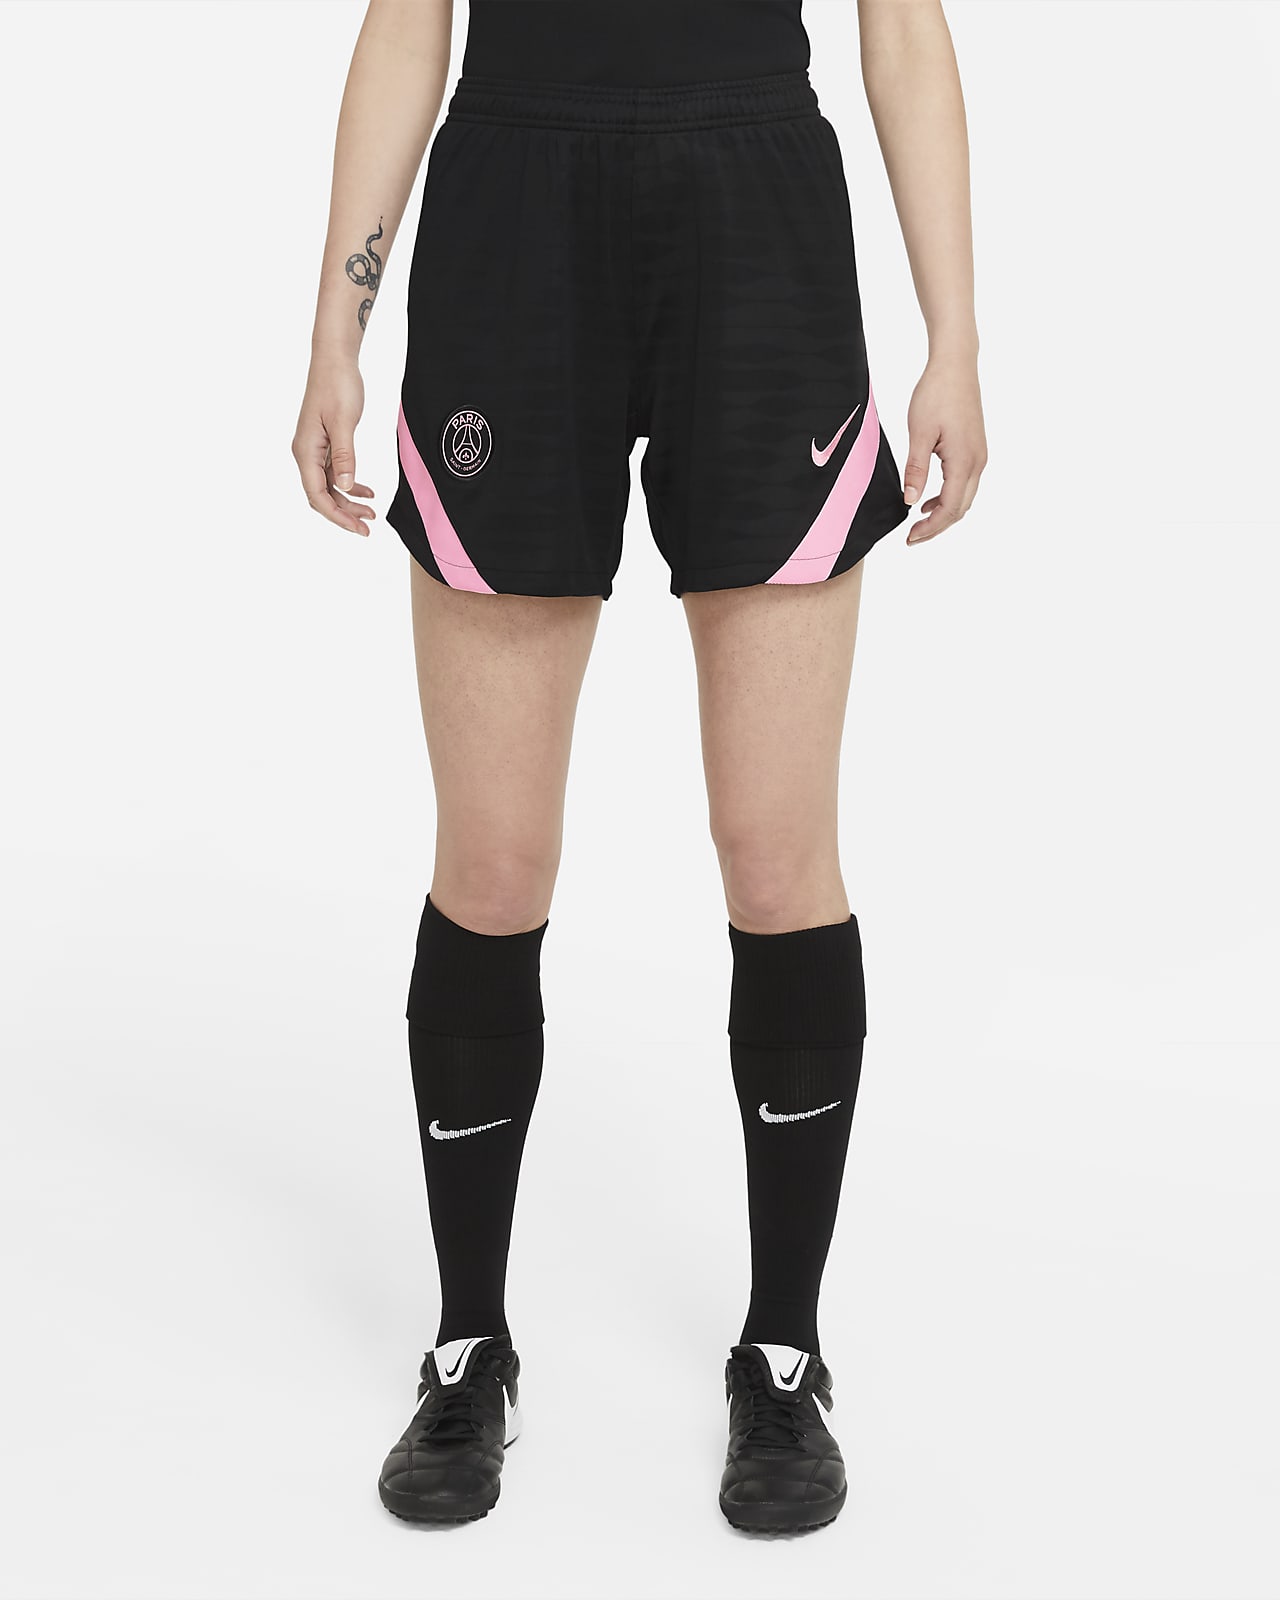 Paris Saint-Germain Strike Away Women's Nike Dri-FIT Knit Football Shorts